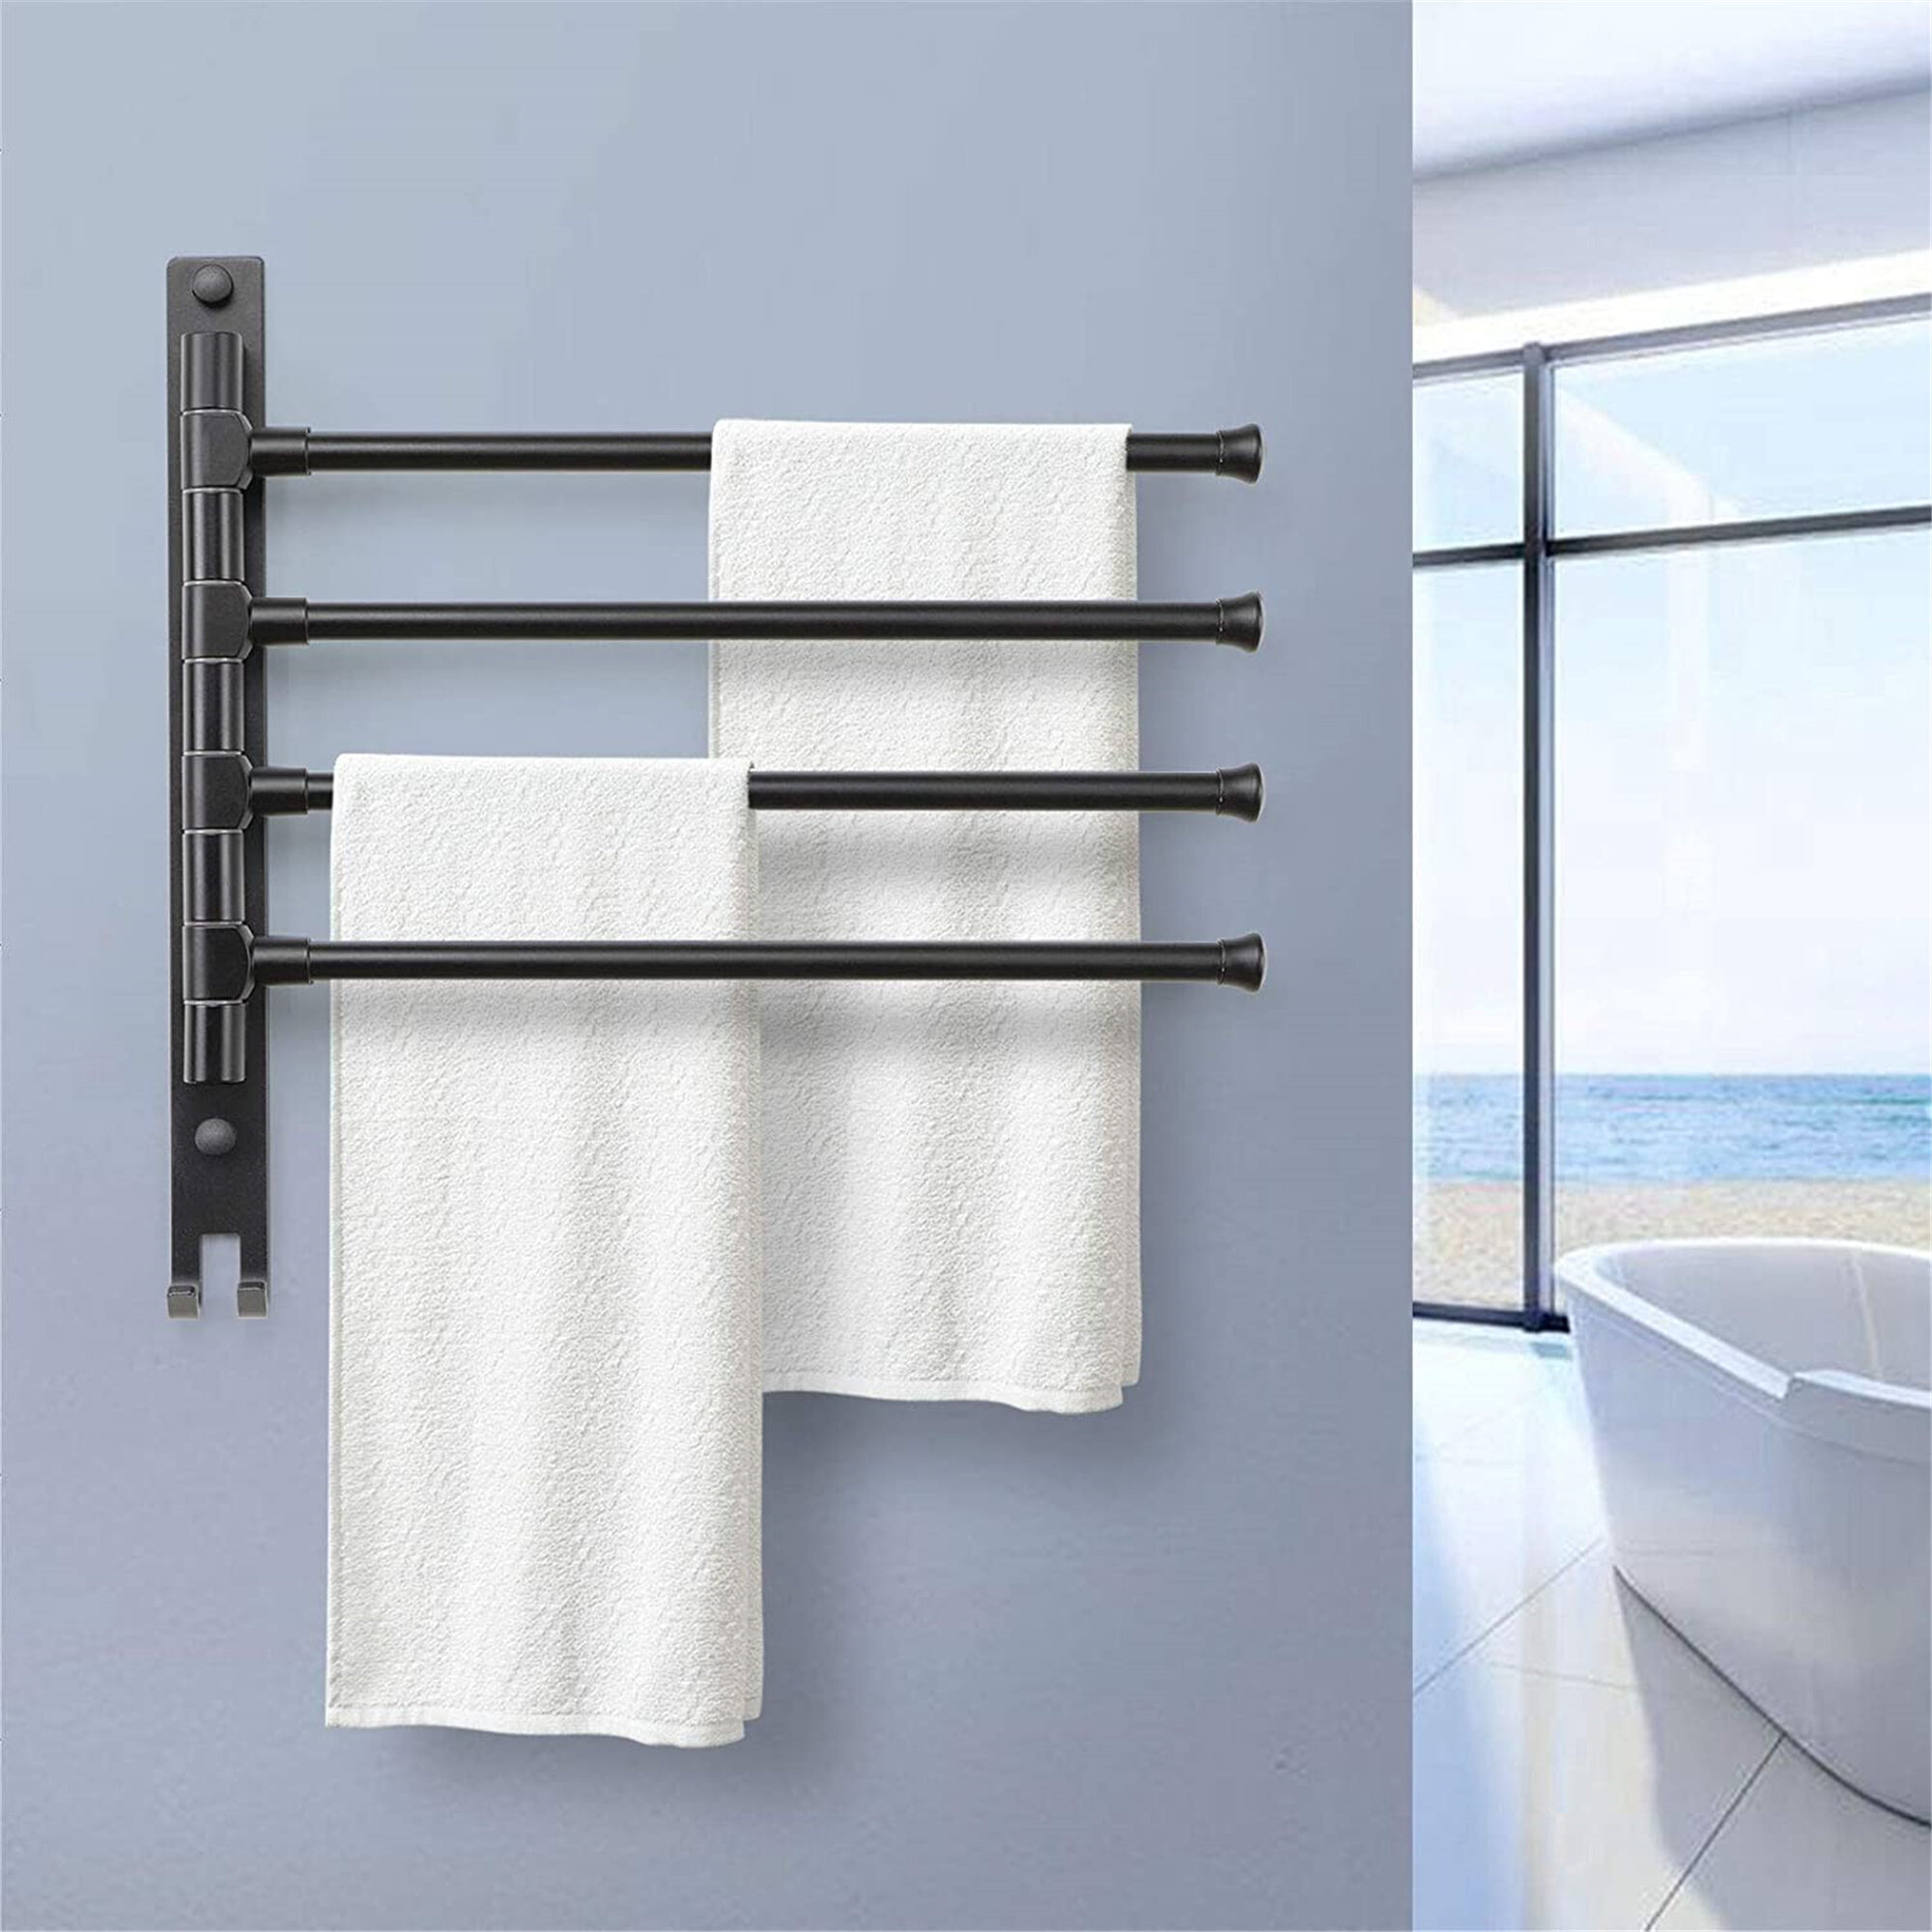 Wall Mounted Swing Towel Bar Arm Bathroom/Kitchen Swivel Towel Rack Folding Space Saver Towel Rail for Bathroom Hotel Balcony Etc,Black,2 Bars